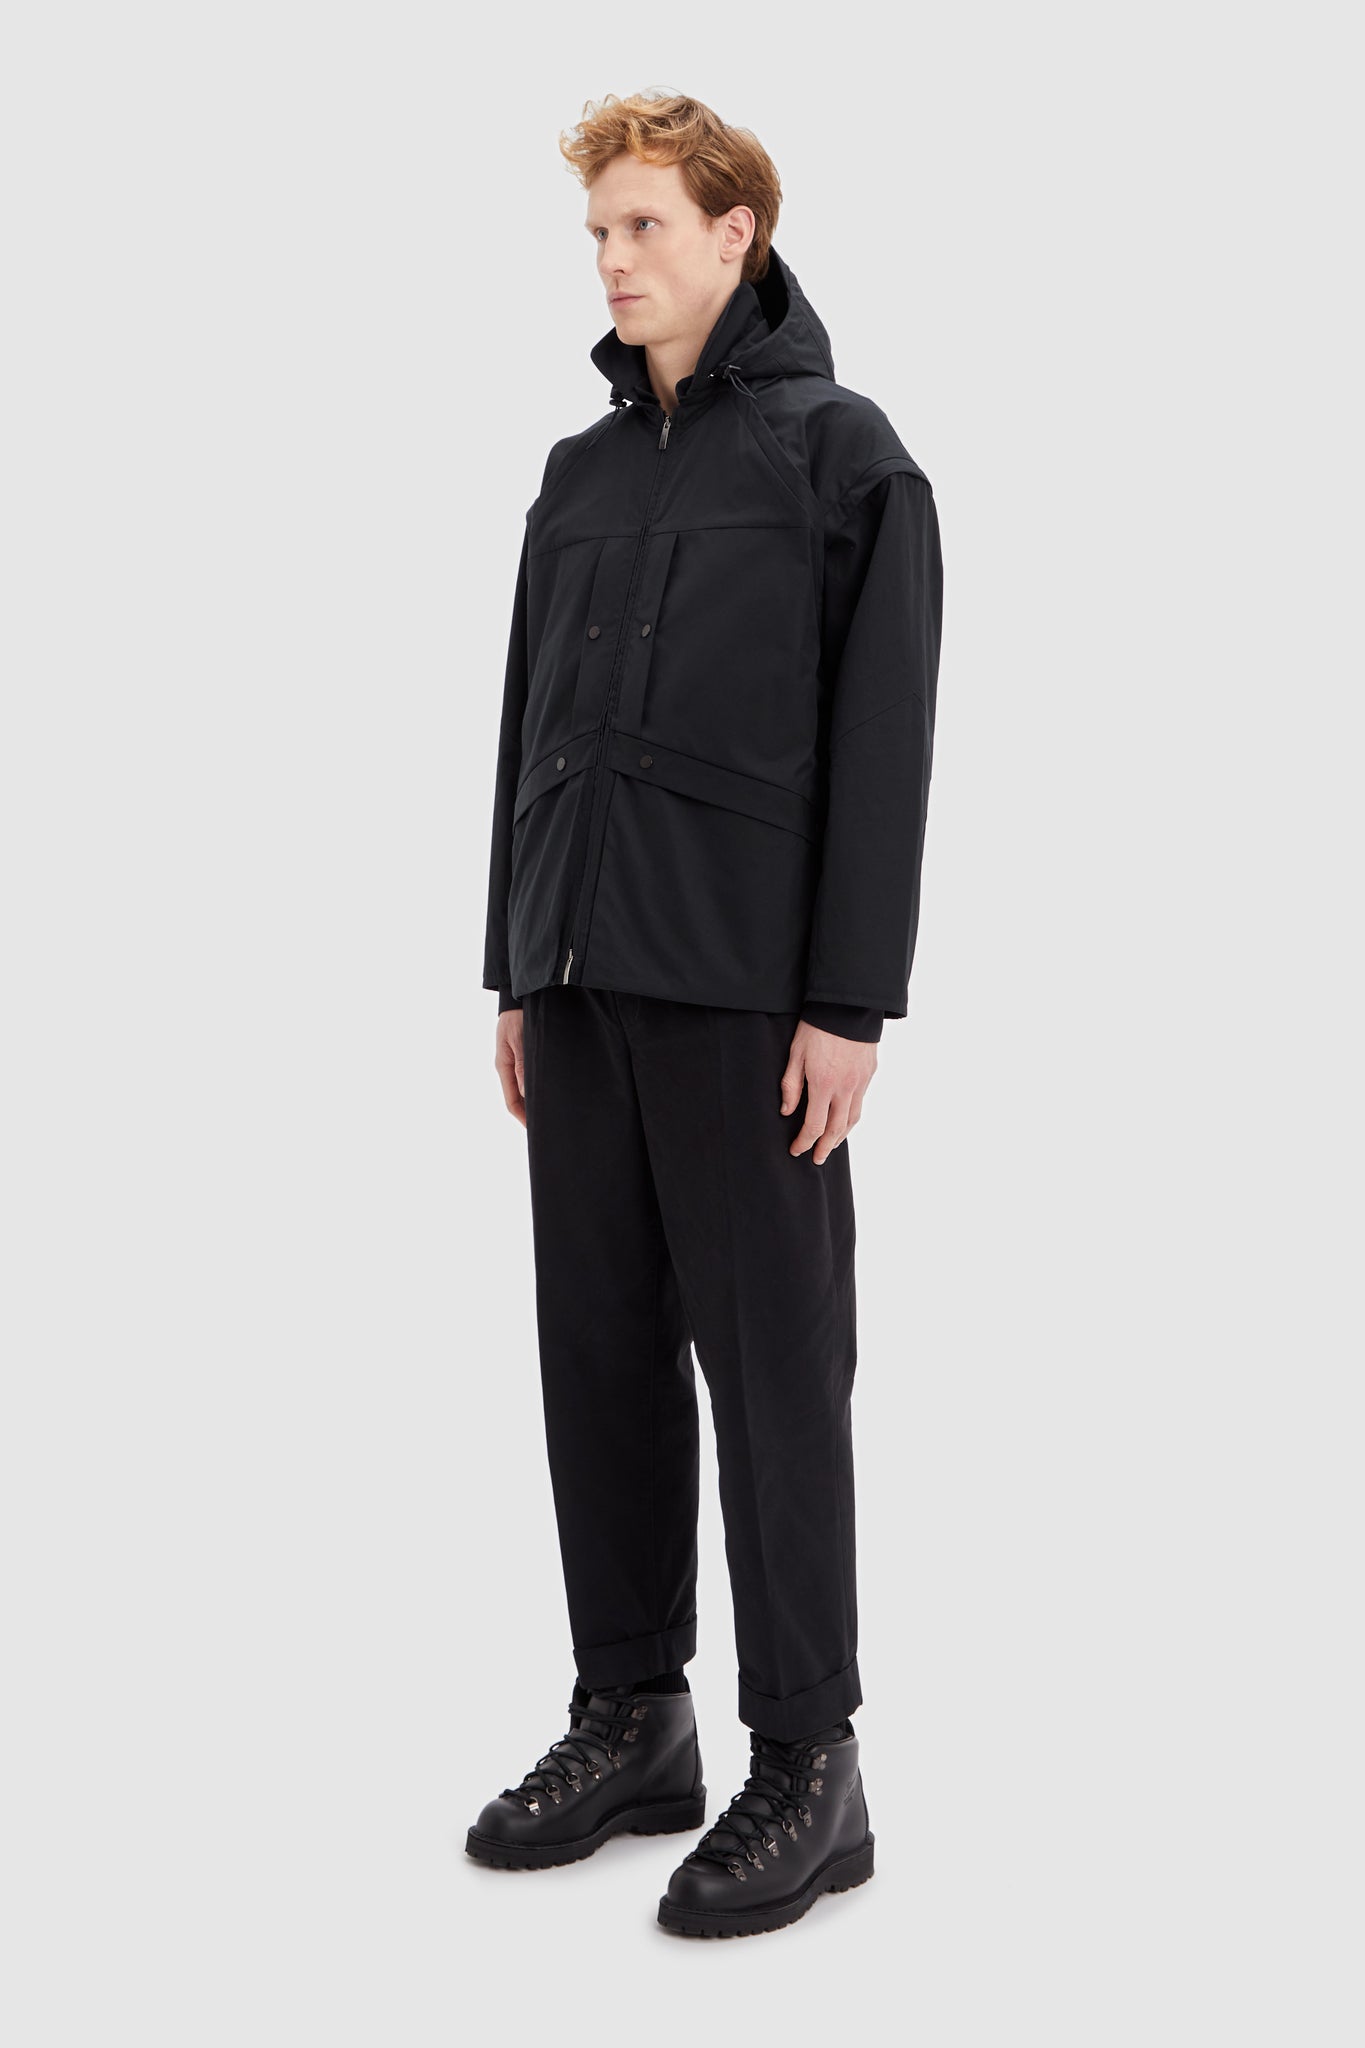 Black Organic Cotton Jacket with hood 45 degree 